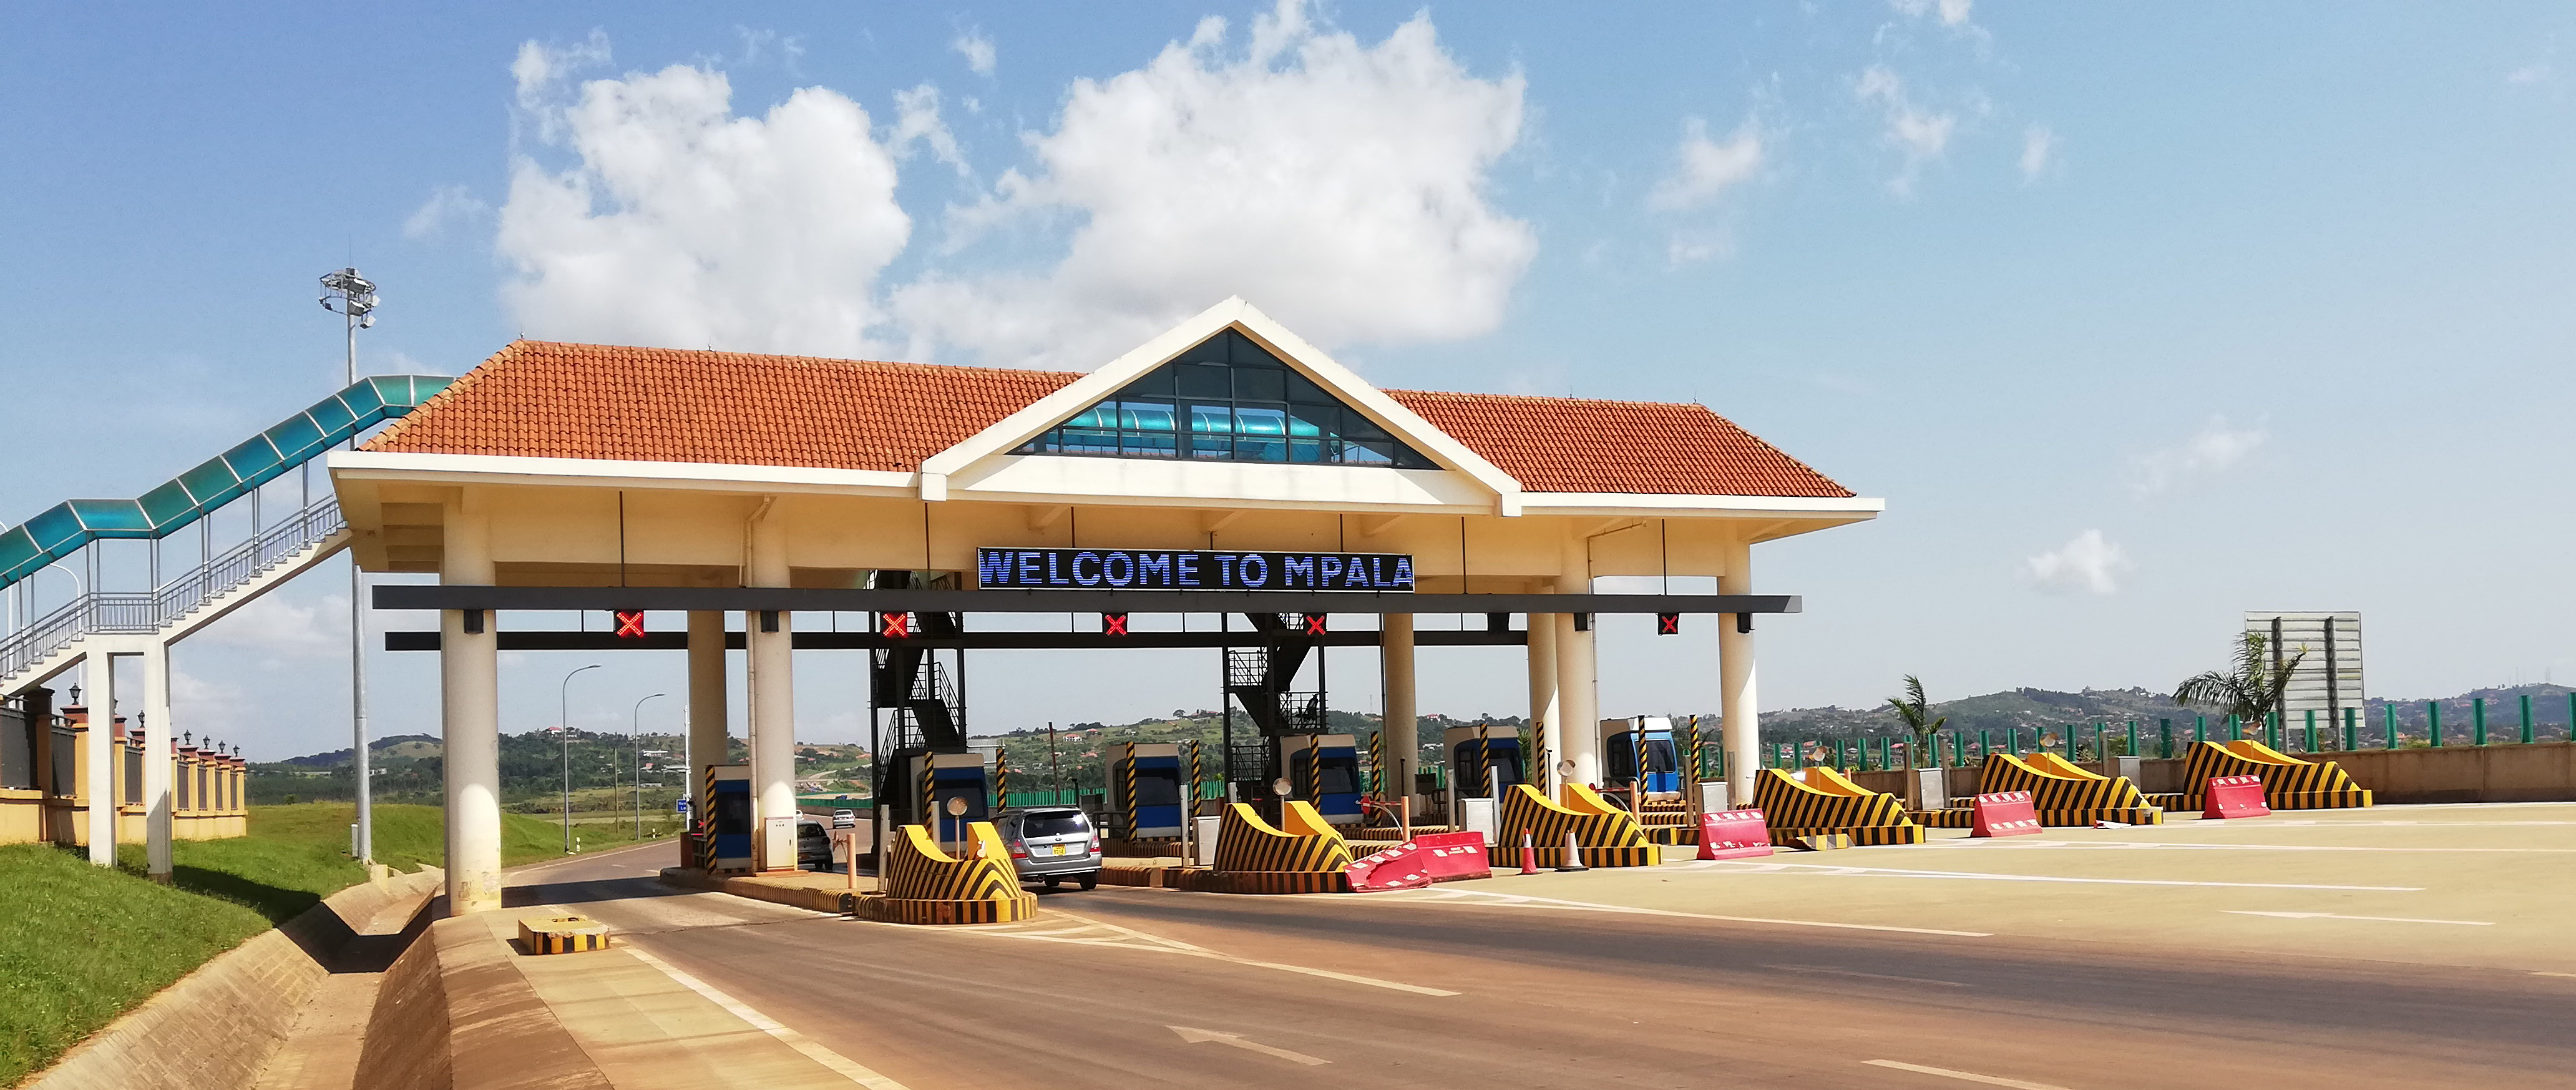 Egis Uganda National Roads Authority Kampala-Entebbe Expressway toll road